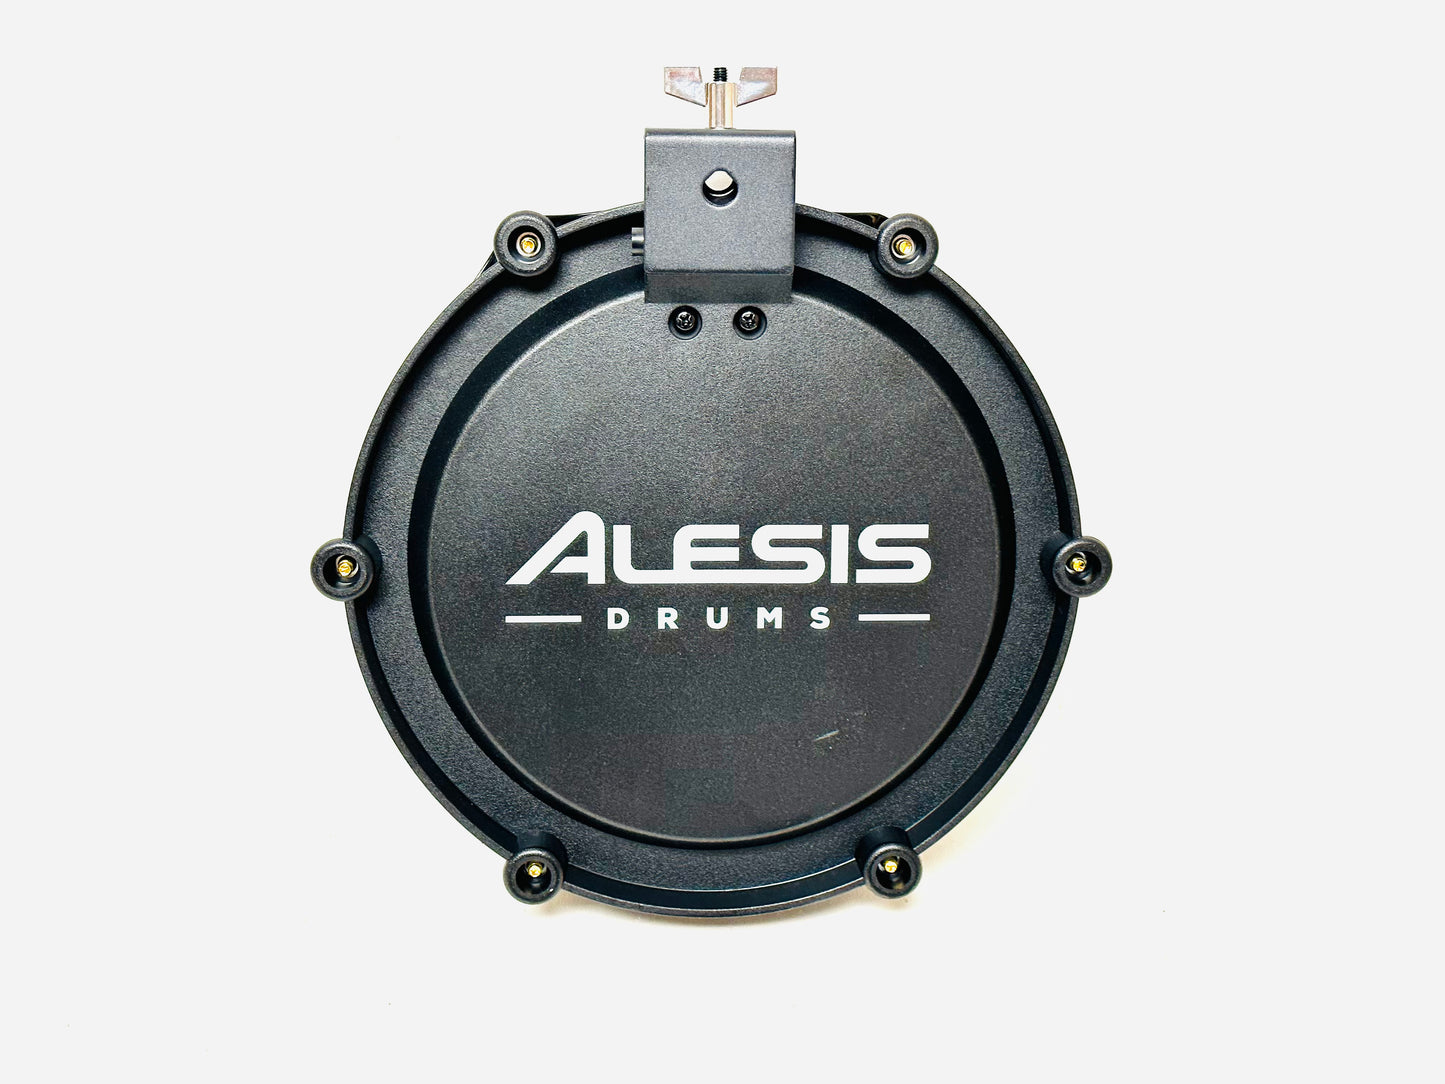 Alesis SE 10” Command Surge Tom mesh pad